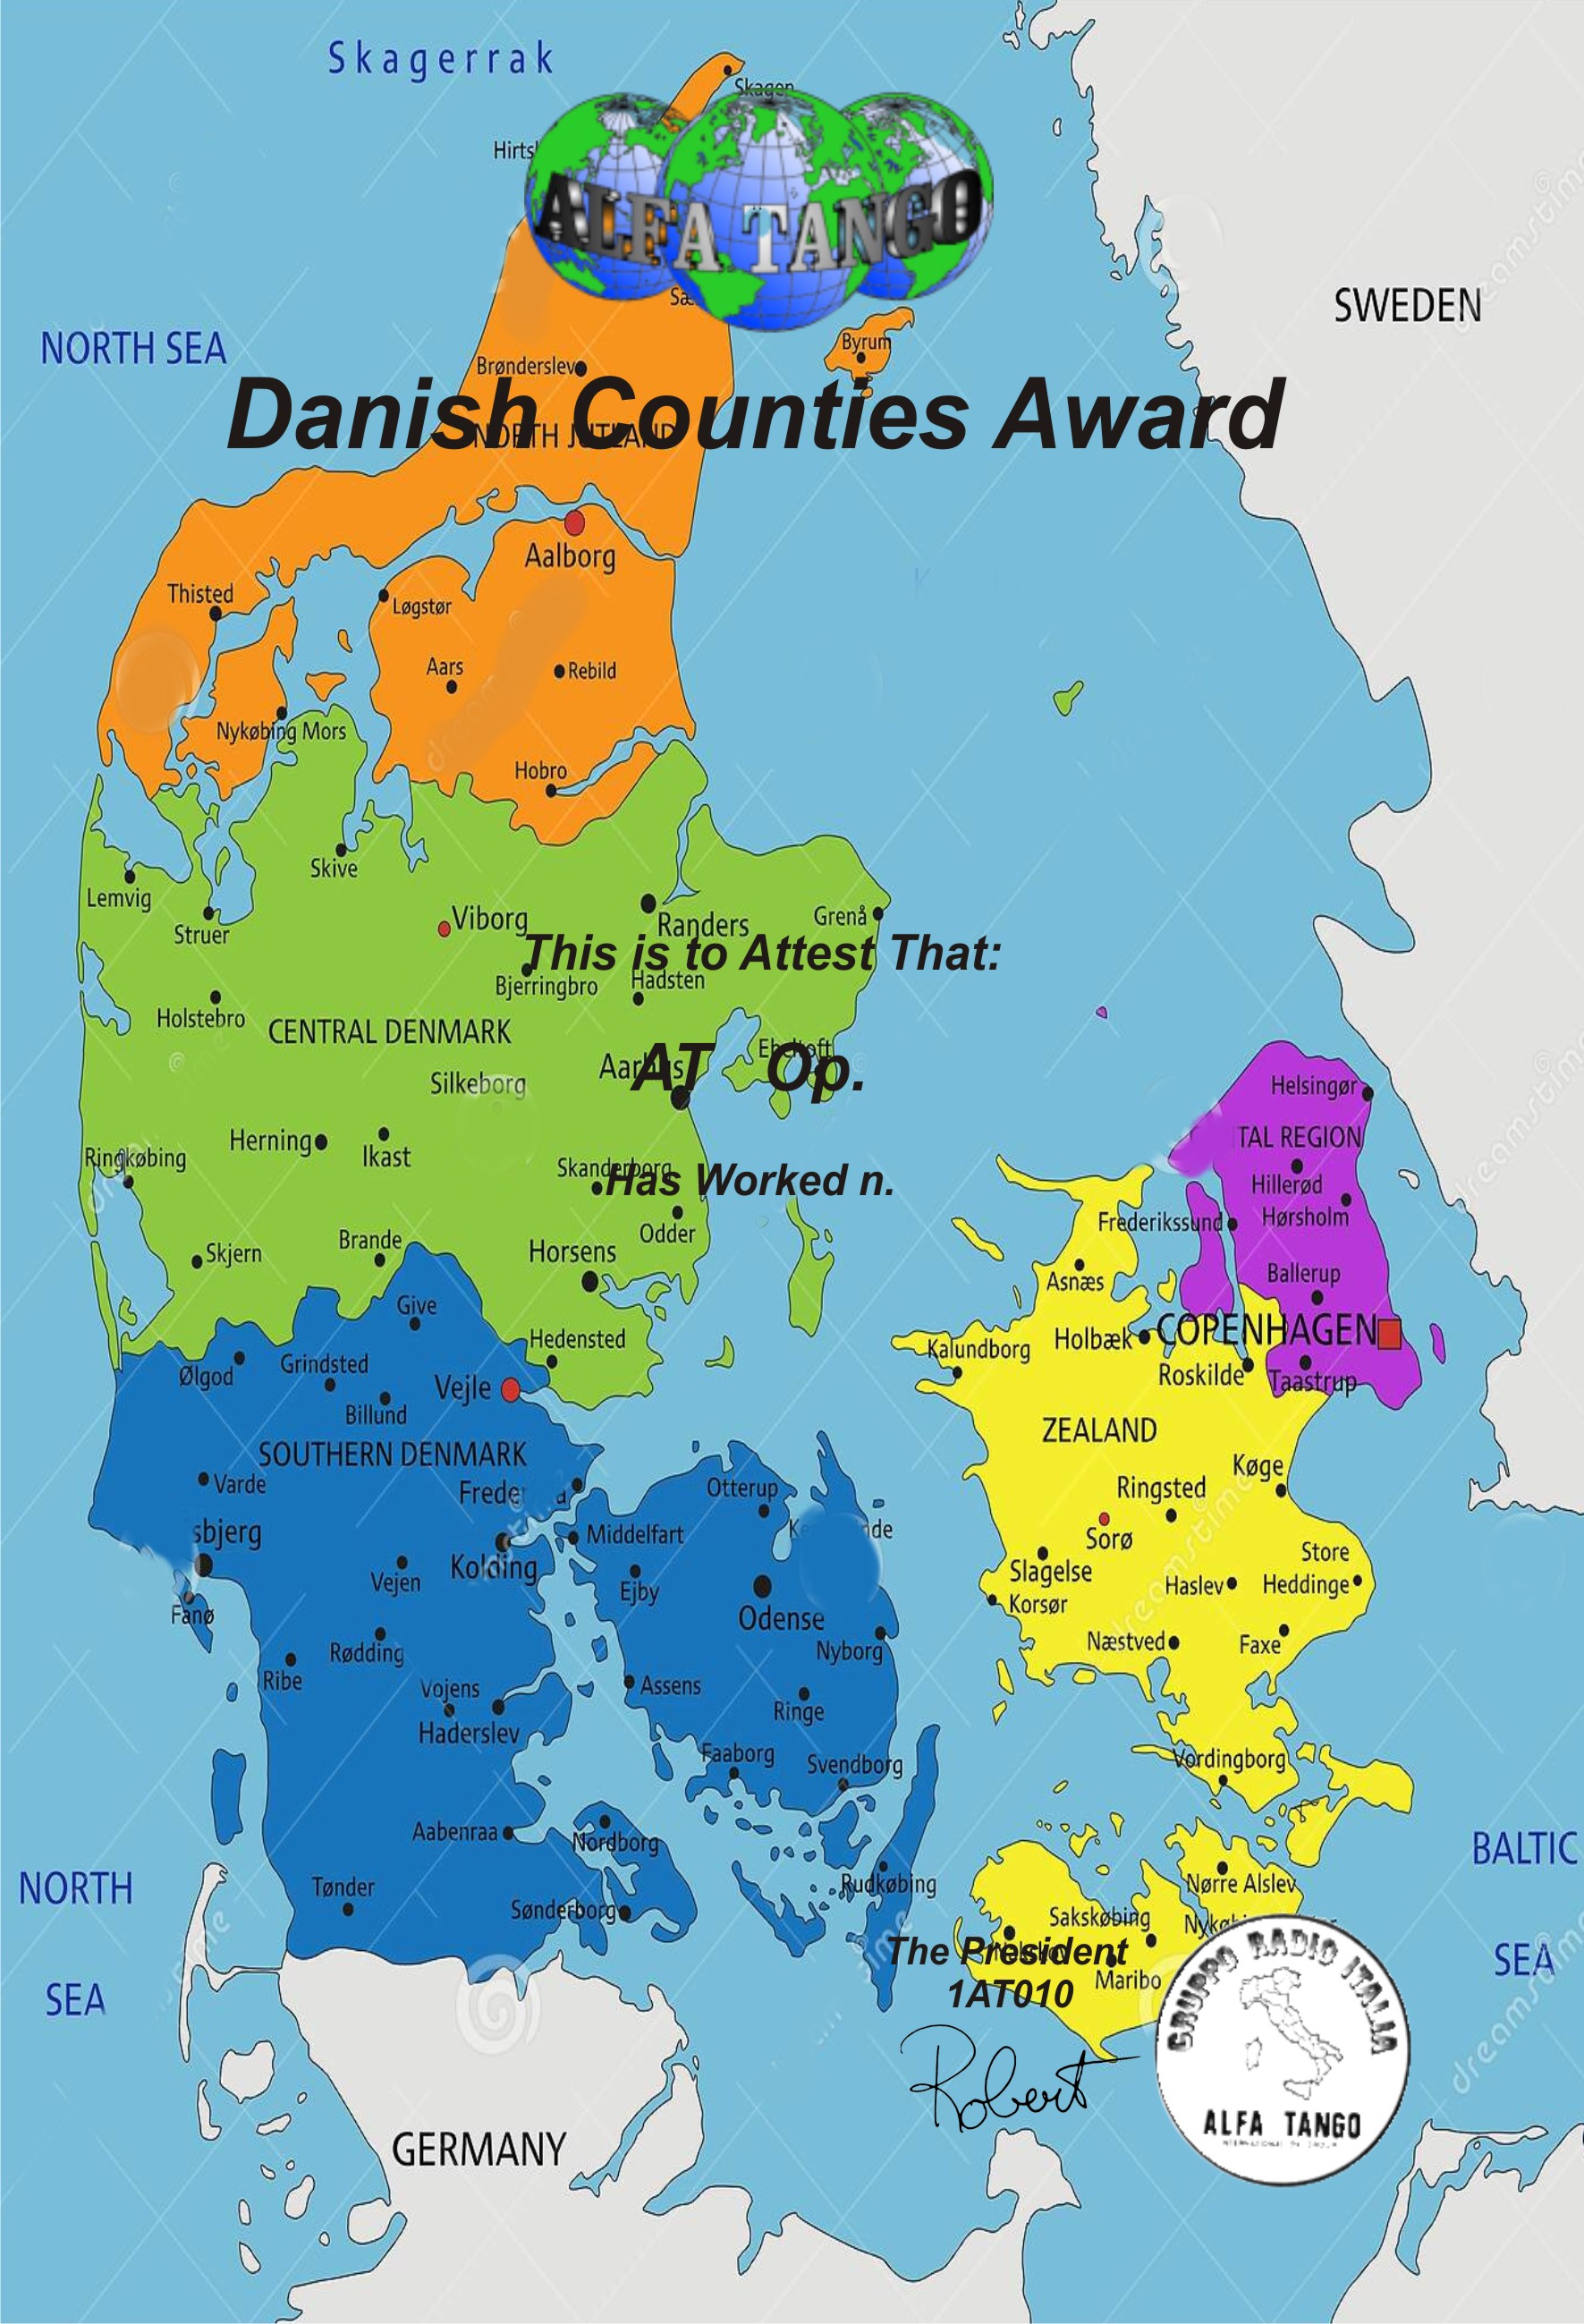 36_Danish_Counties_Award.jpg